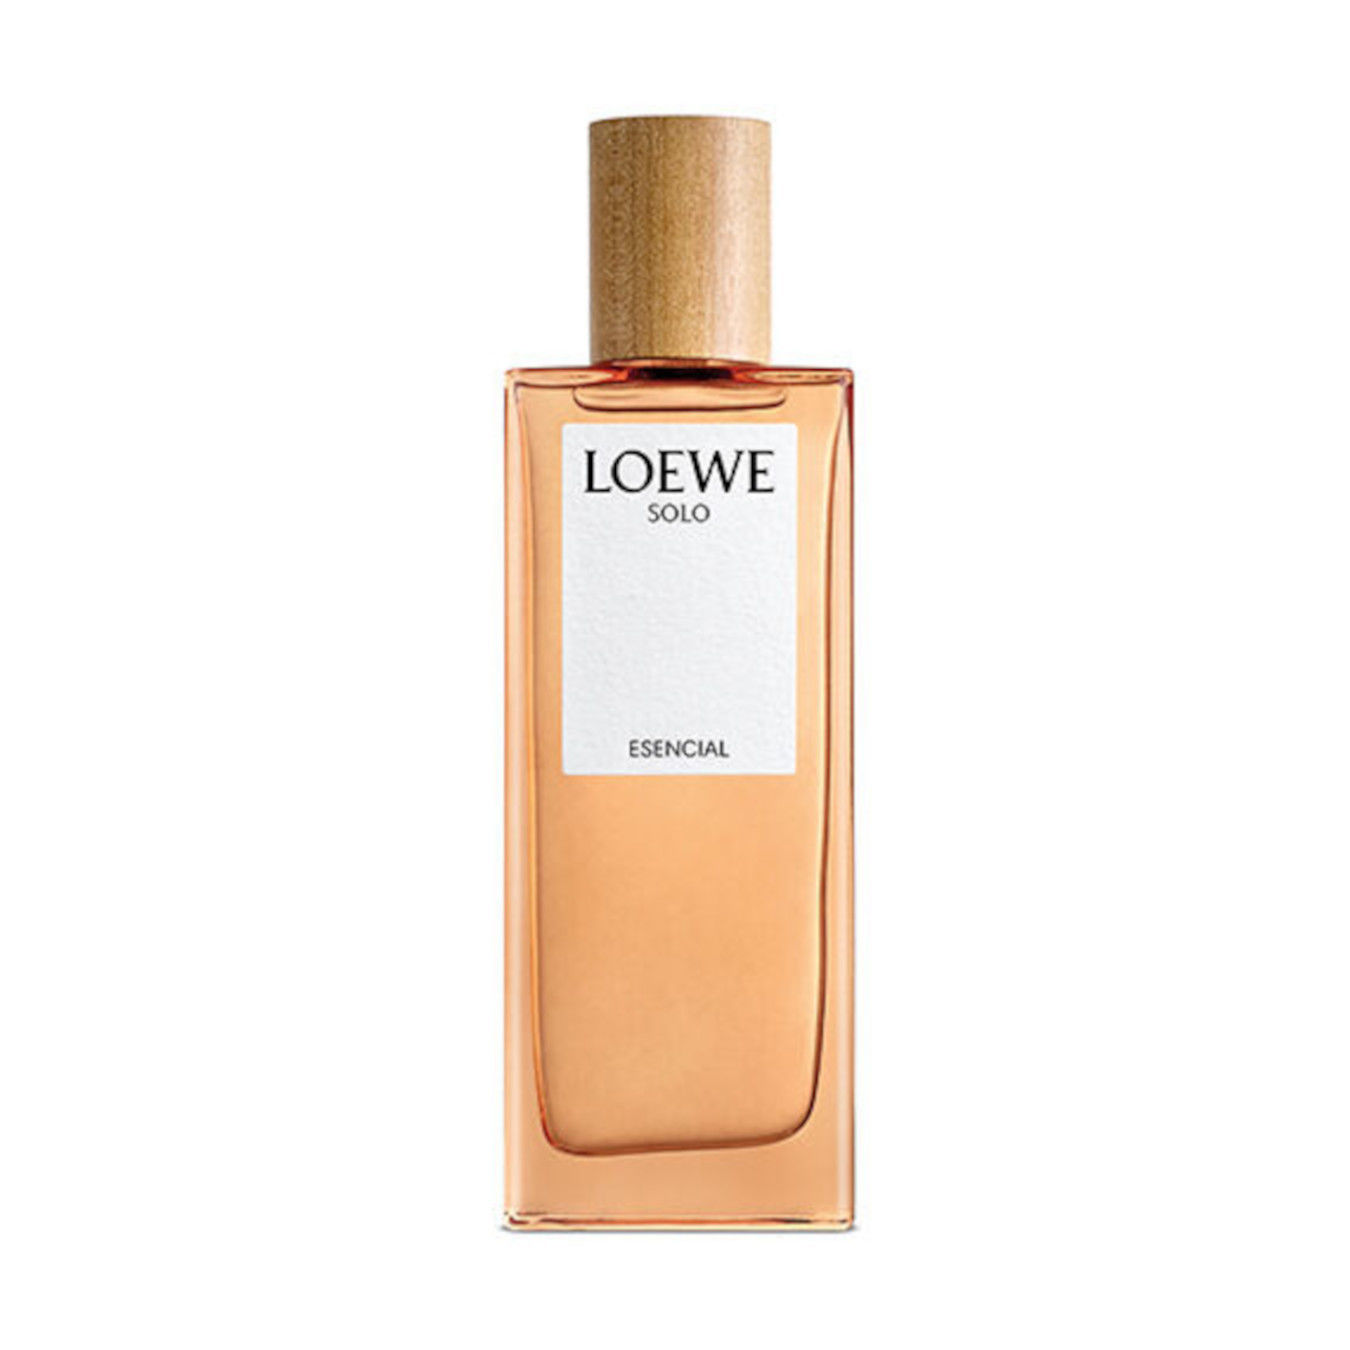 Loewe Solo Esencial Eau de Toilette 50ml Herren von Loewe